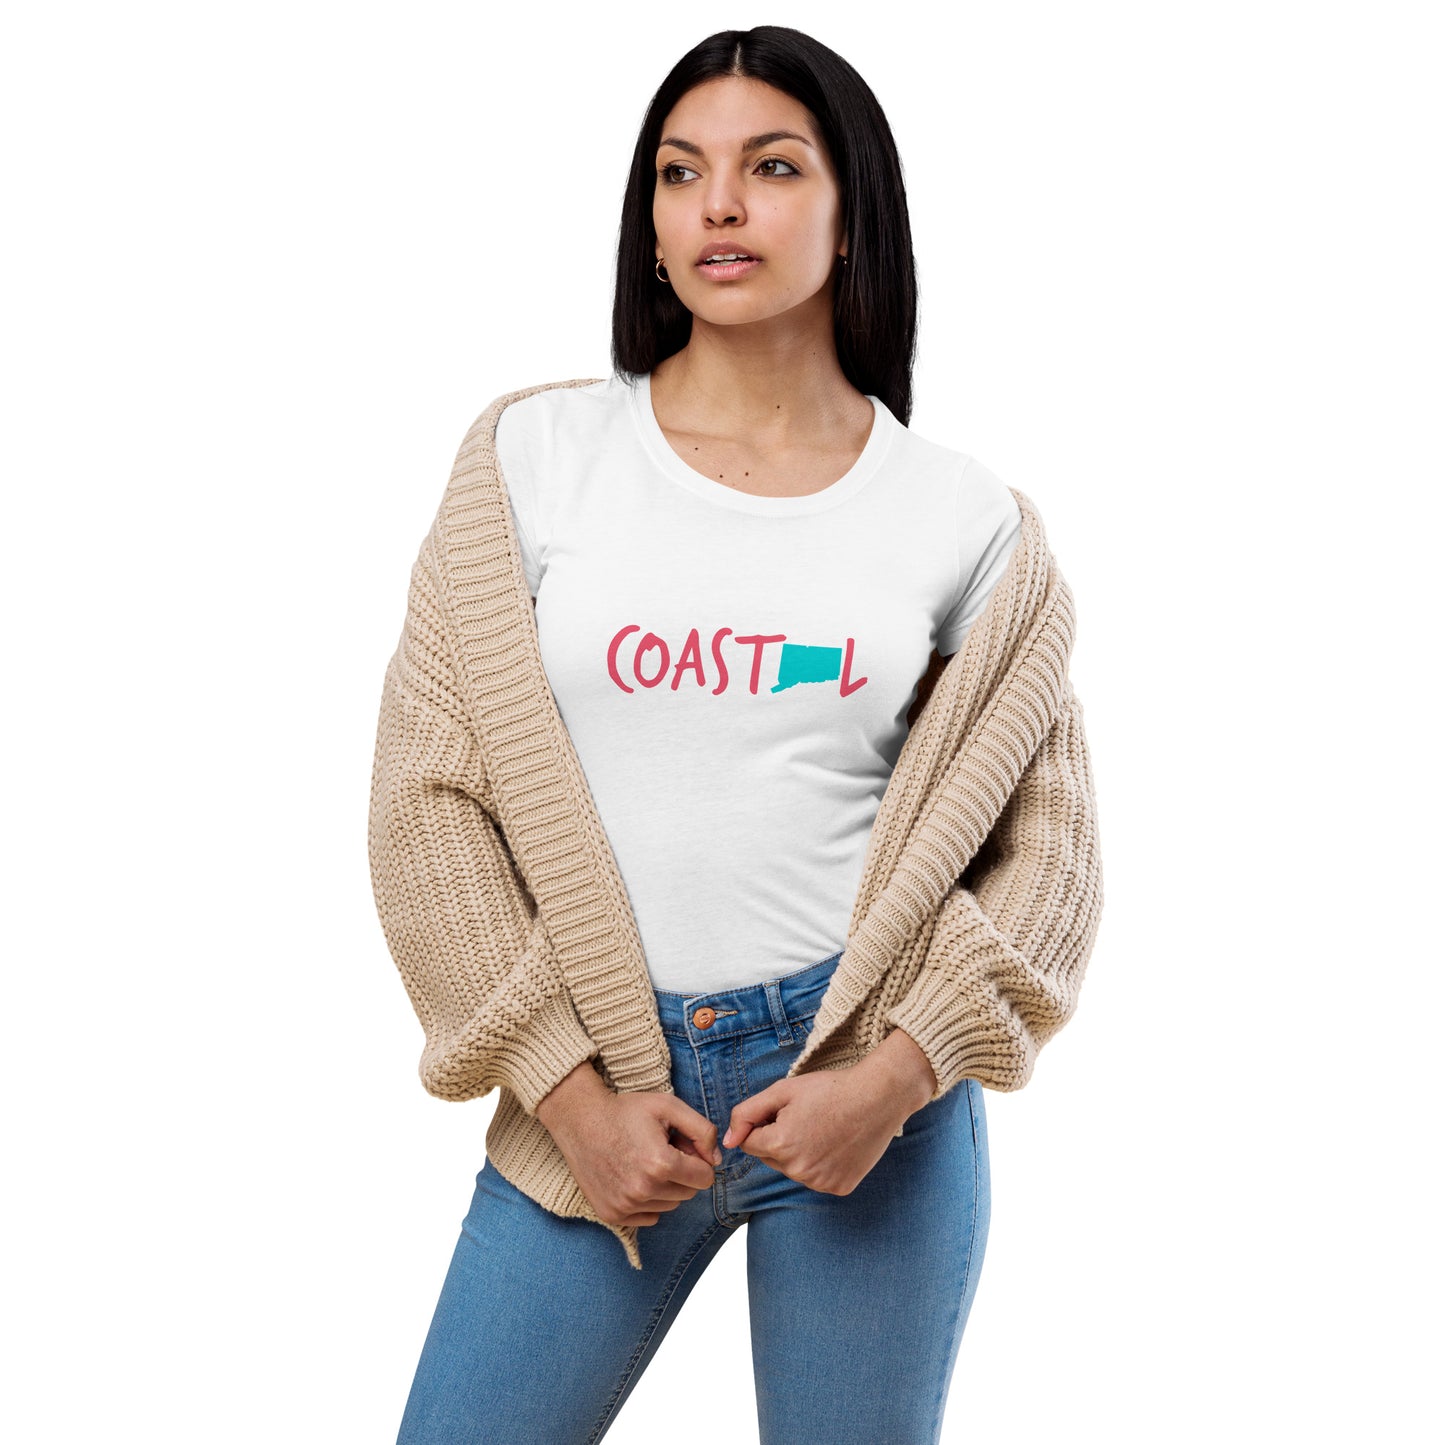 Coastal Connecticut™ Women's Fashion Fit Tee